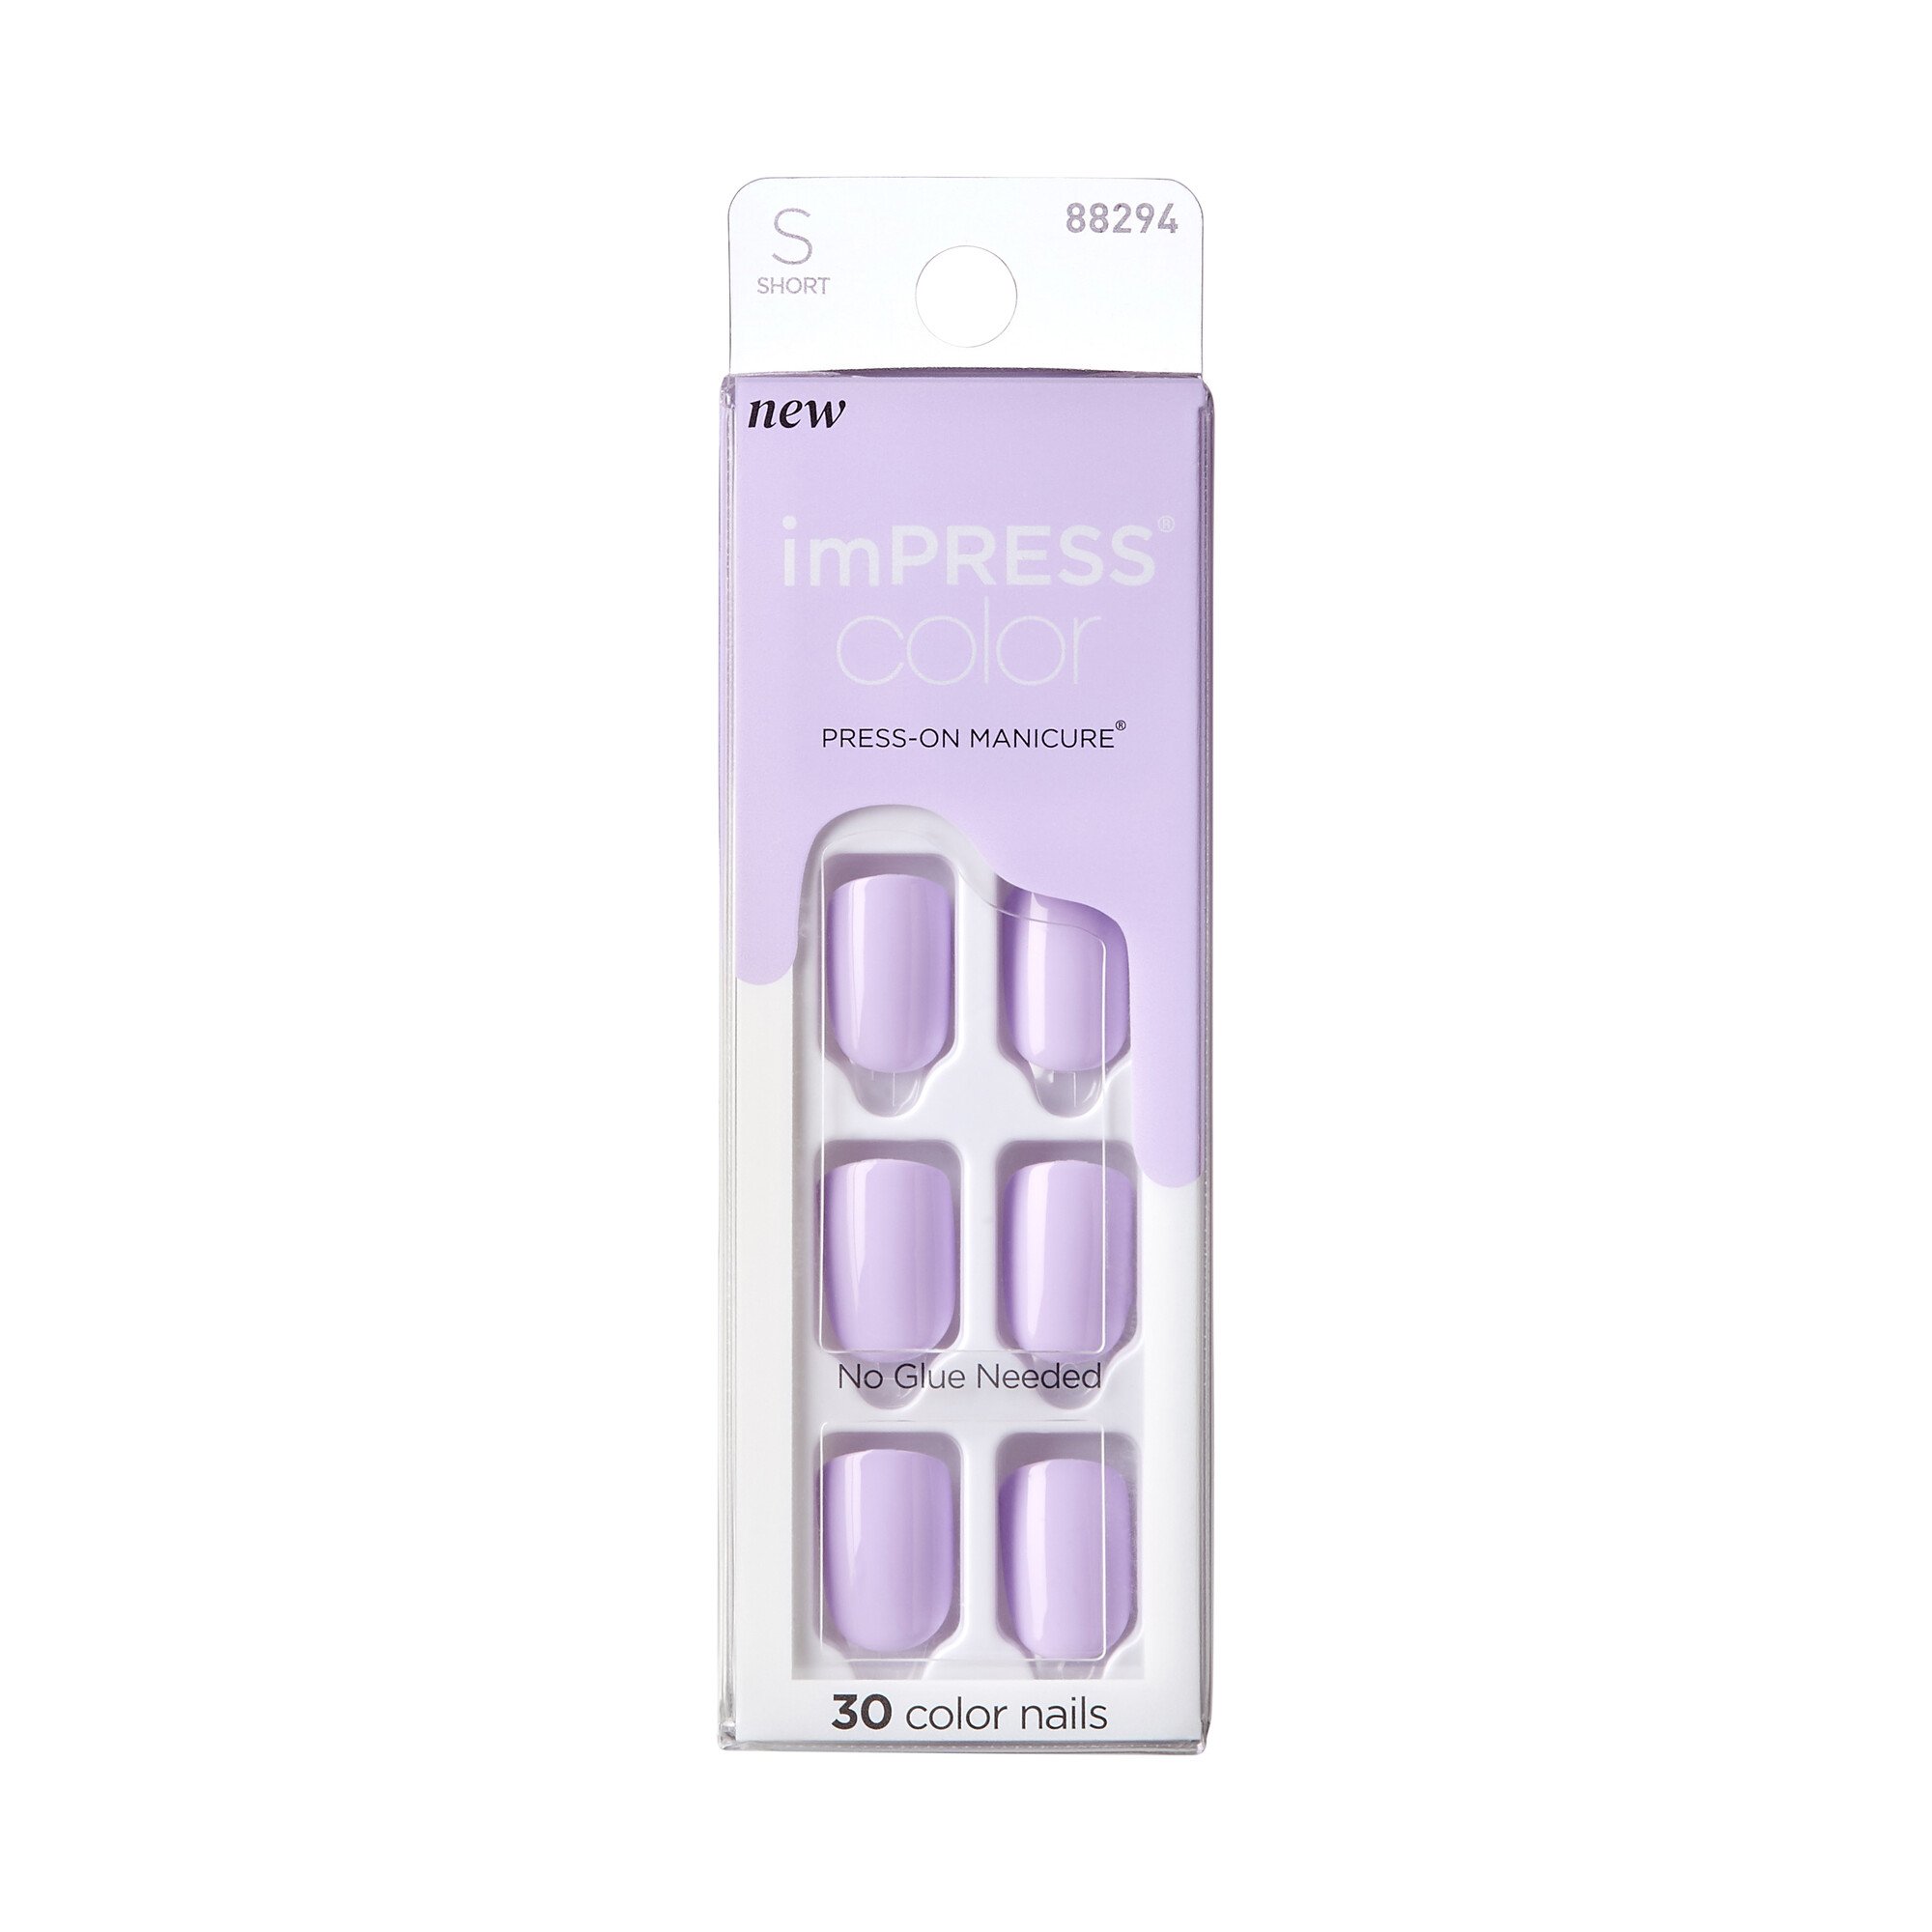 KISS imPRESS Color Press-On Manicure - Vivid Lavender - Shop Nail Sets ...